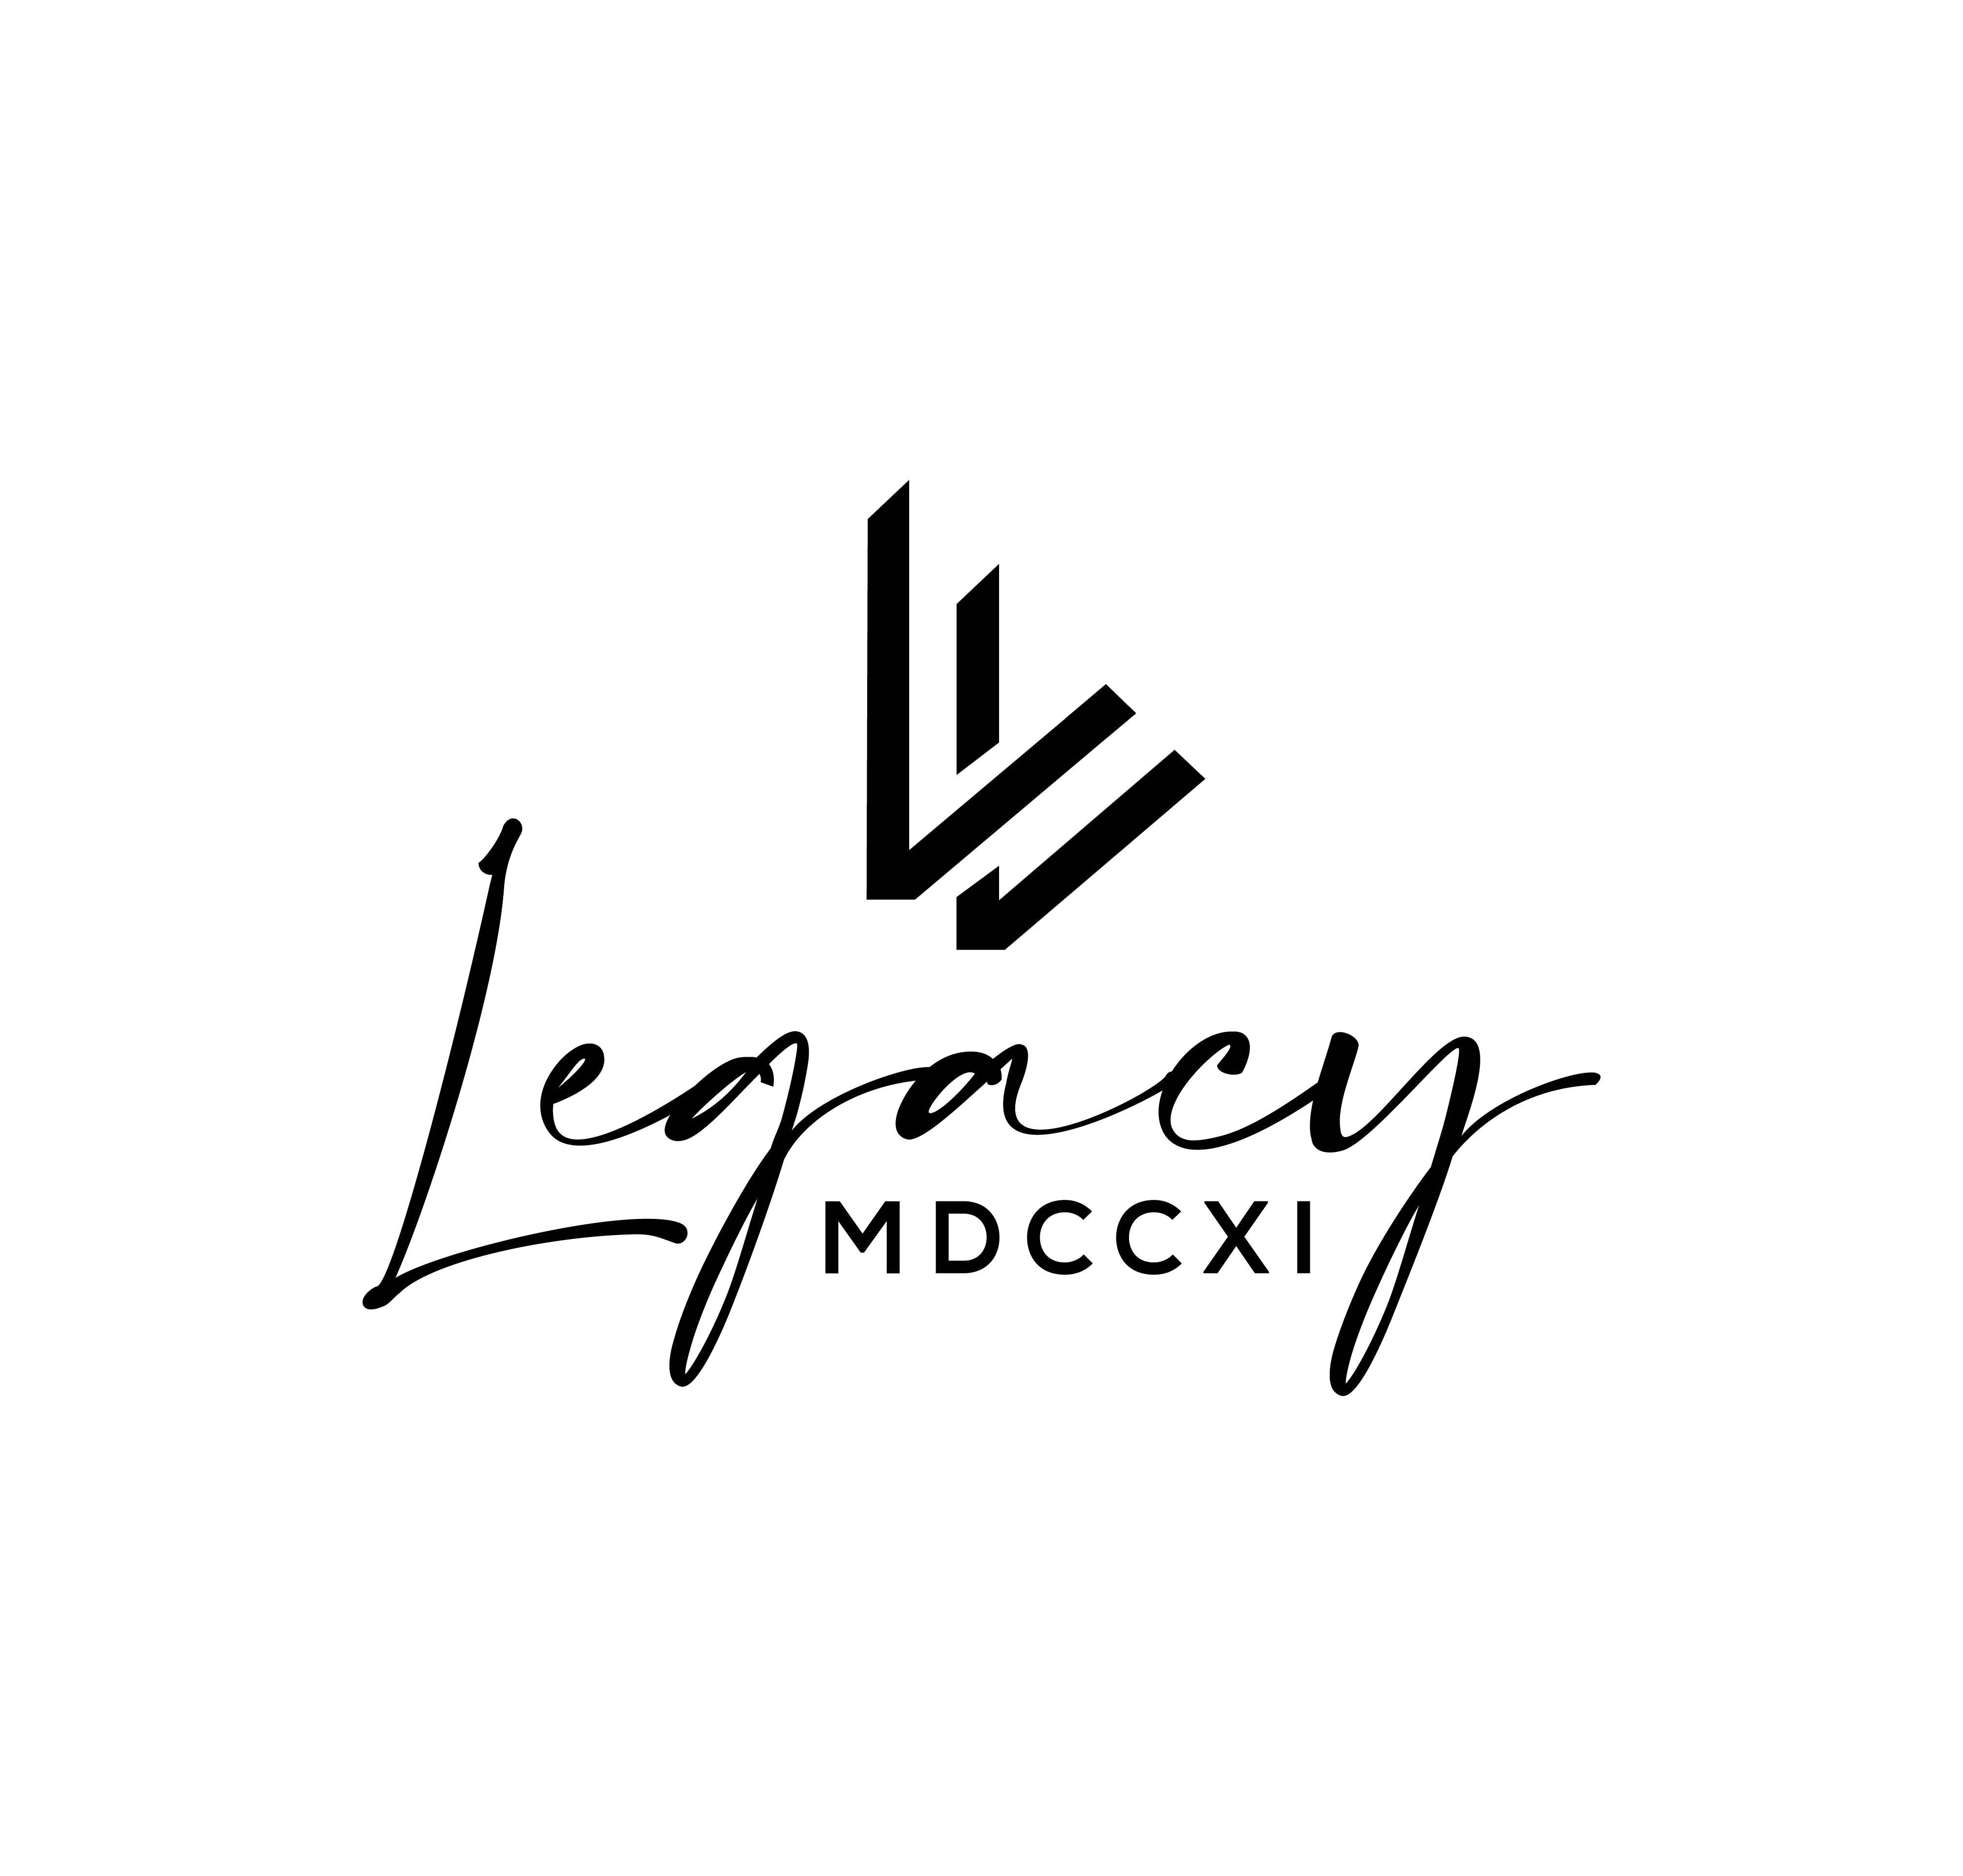 LegacyMDCCXI